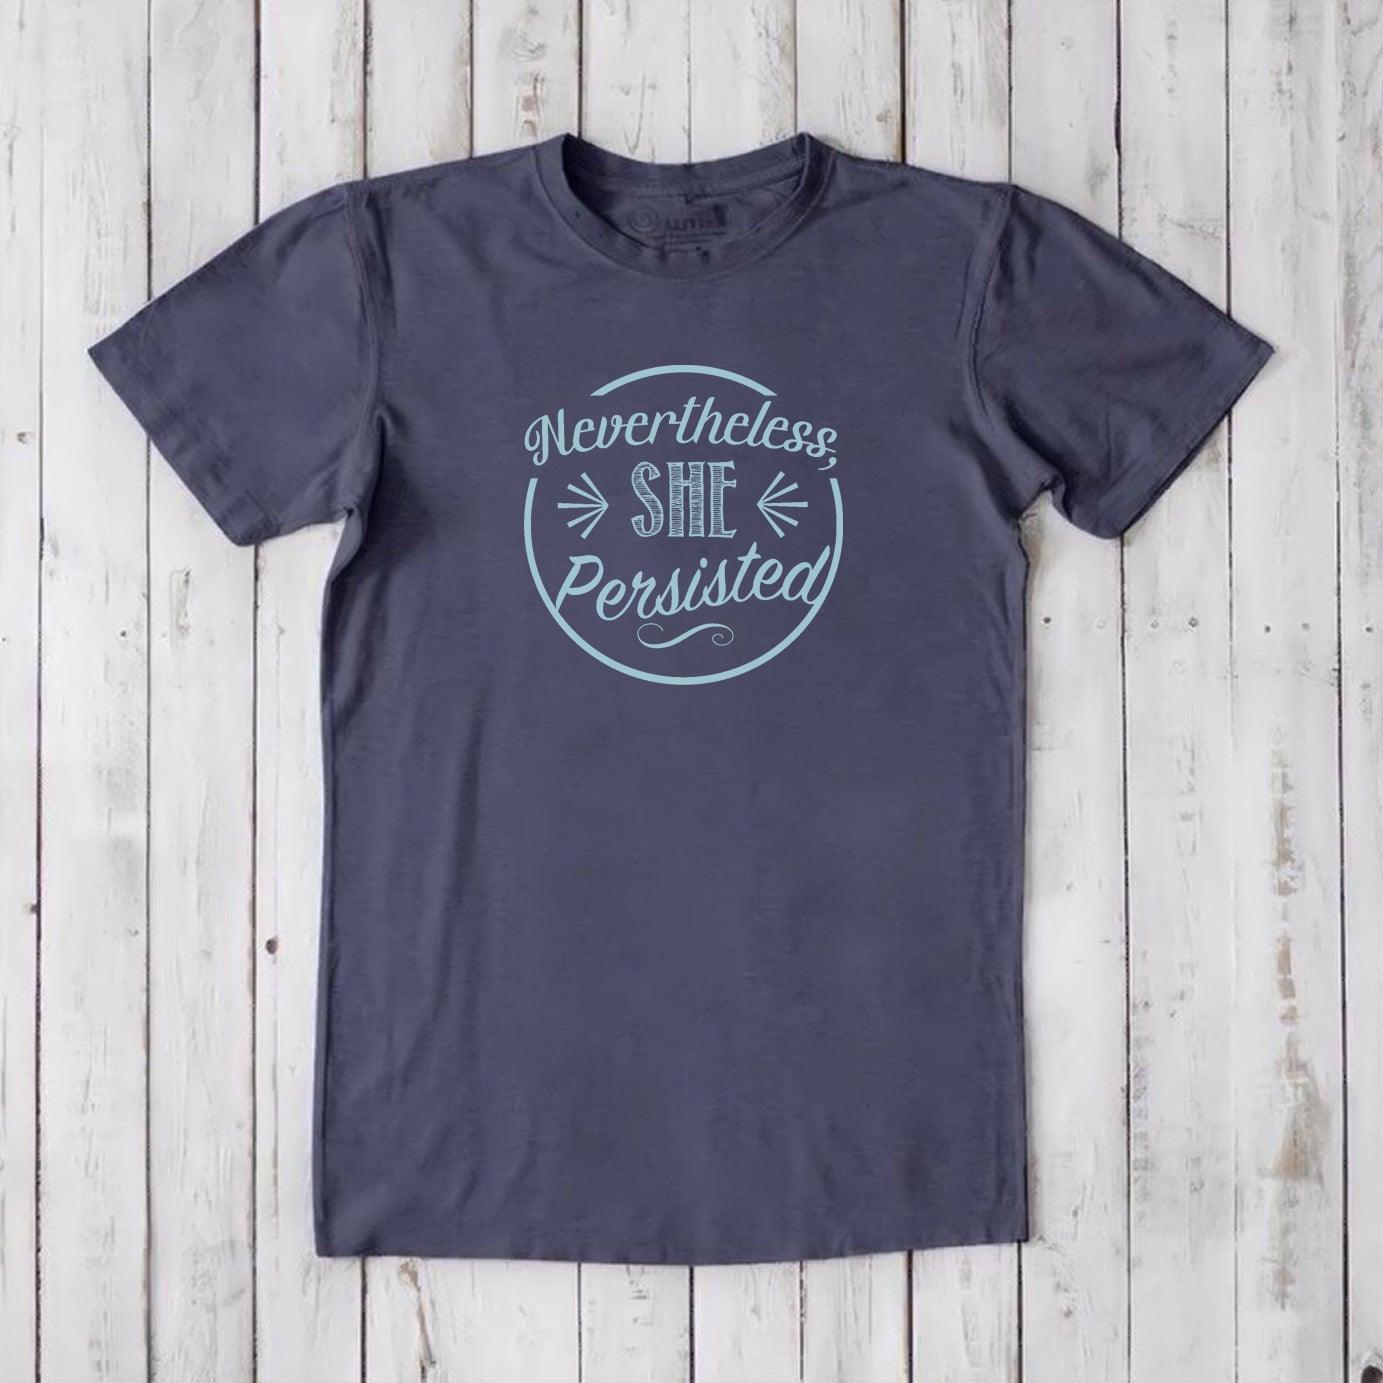 NEVERTHELESS, SHE PERSISTED  T-shirt, Anti Trump Shirt, Feminism T-shirt, Organic Clothing